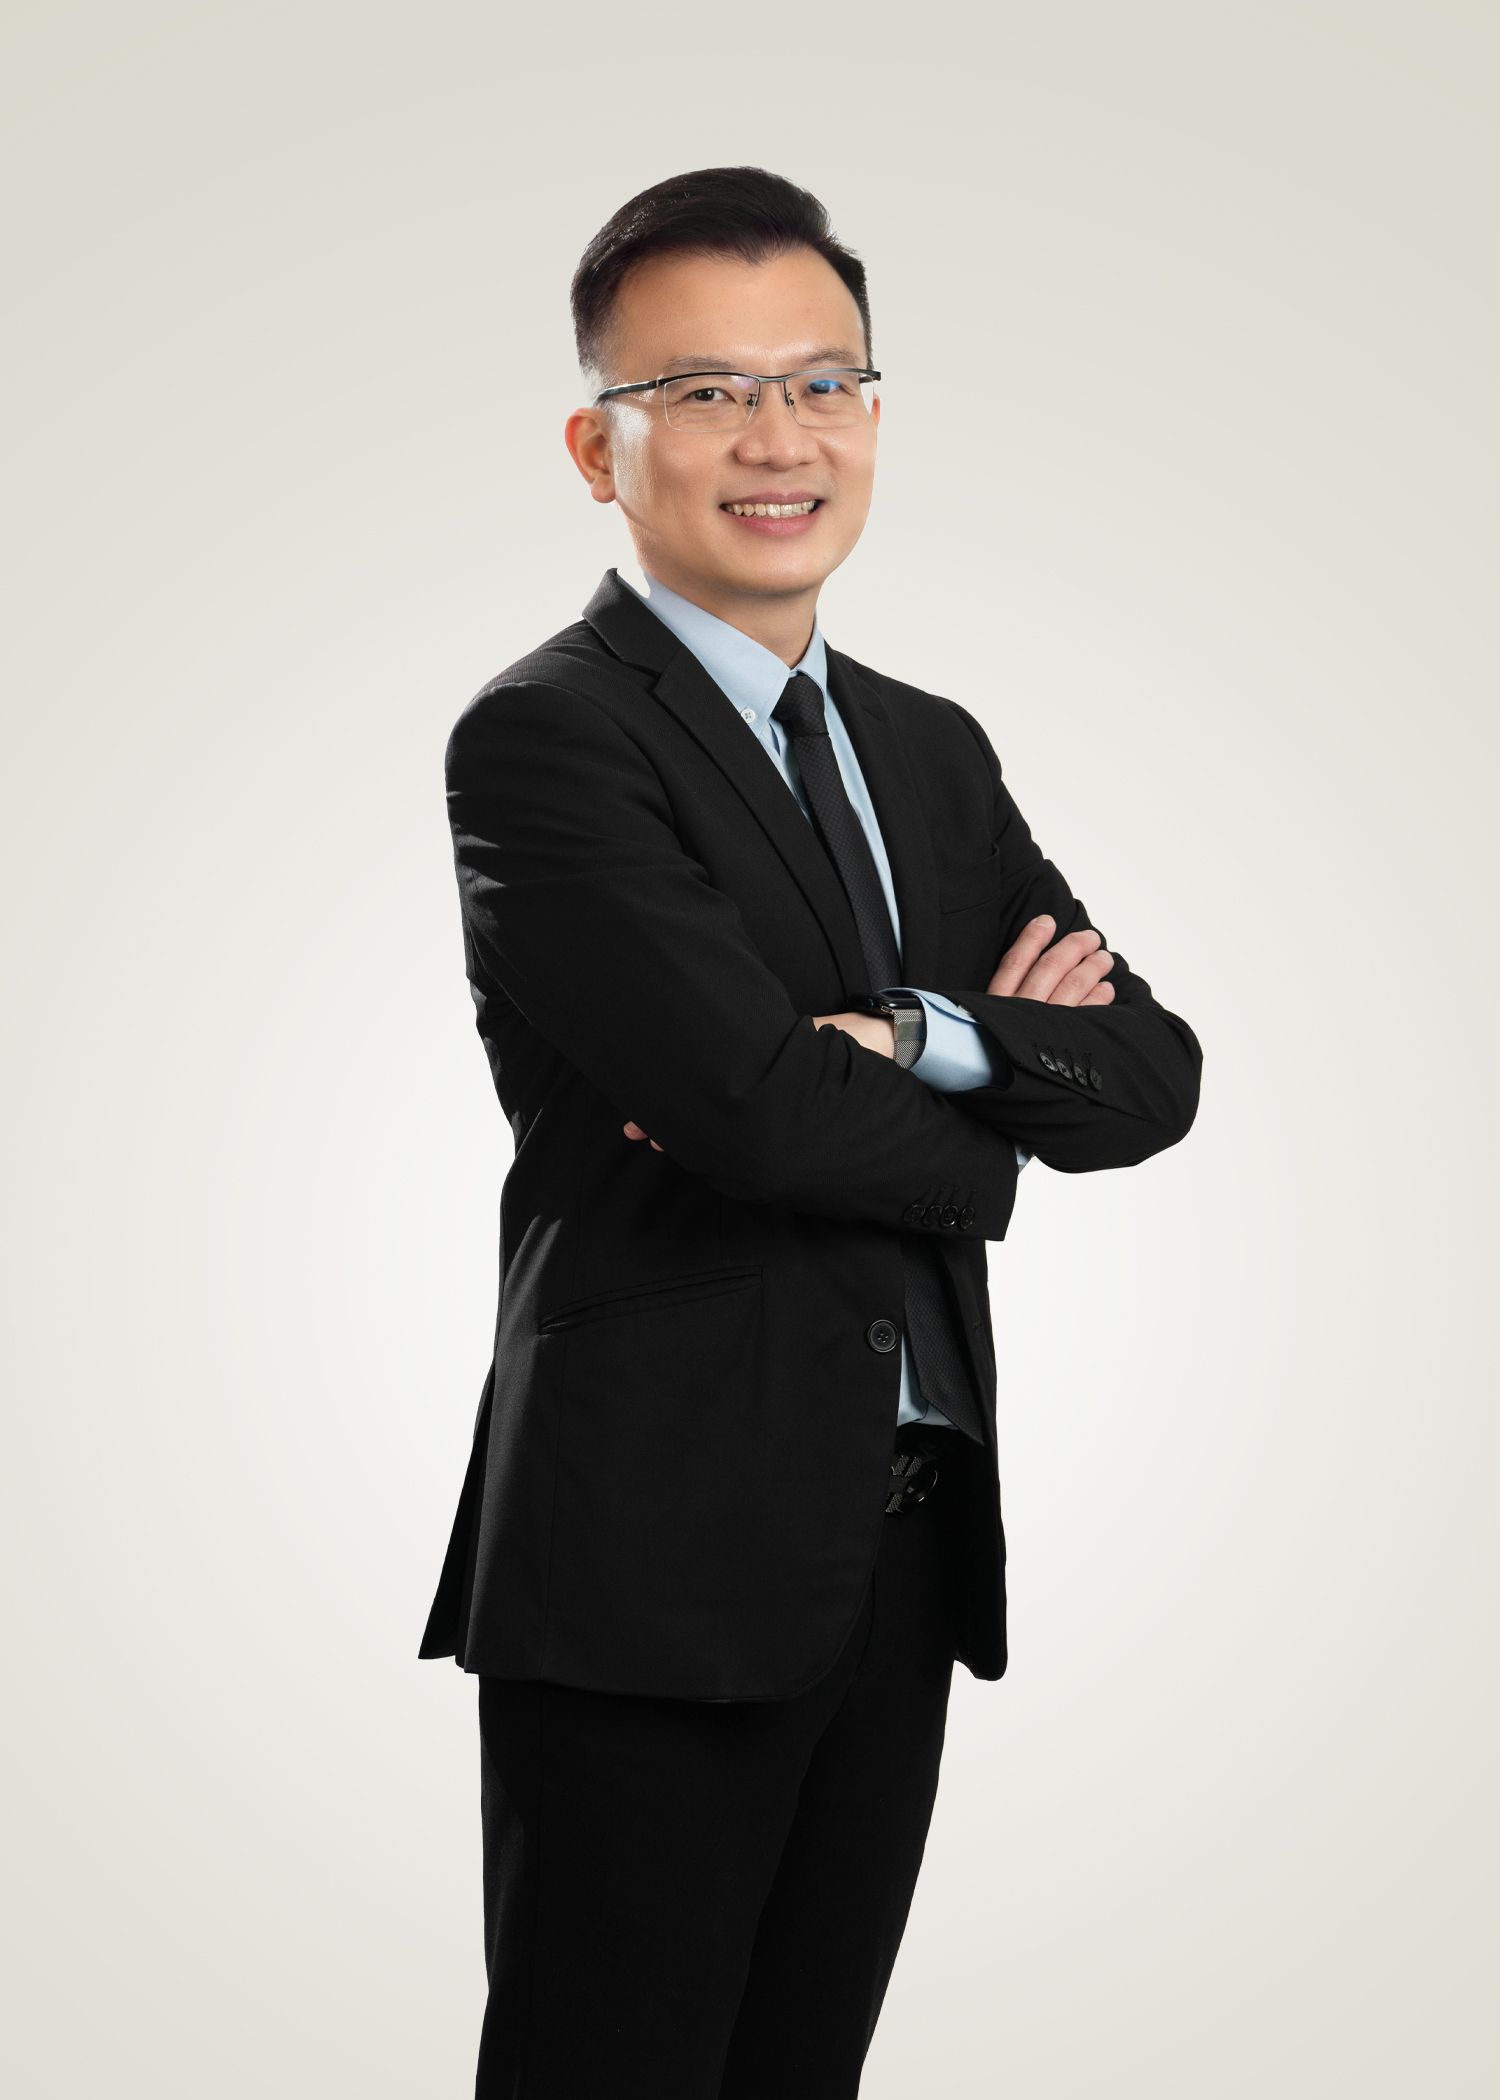 Director General de DC Healthcare, Dr. Chong Tze Sheng